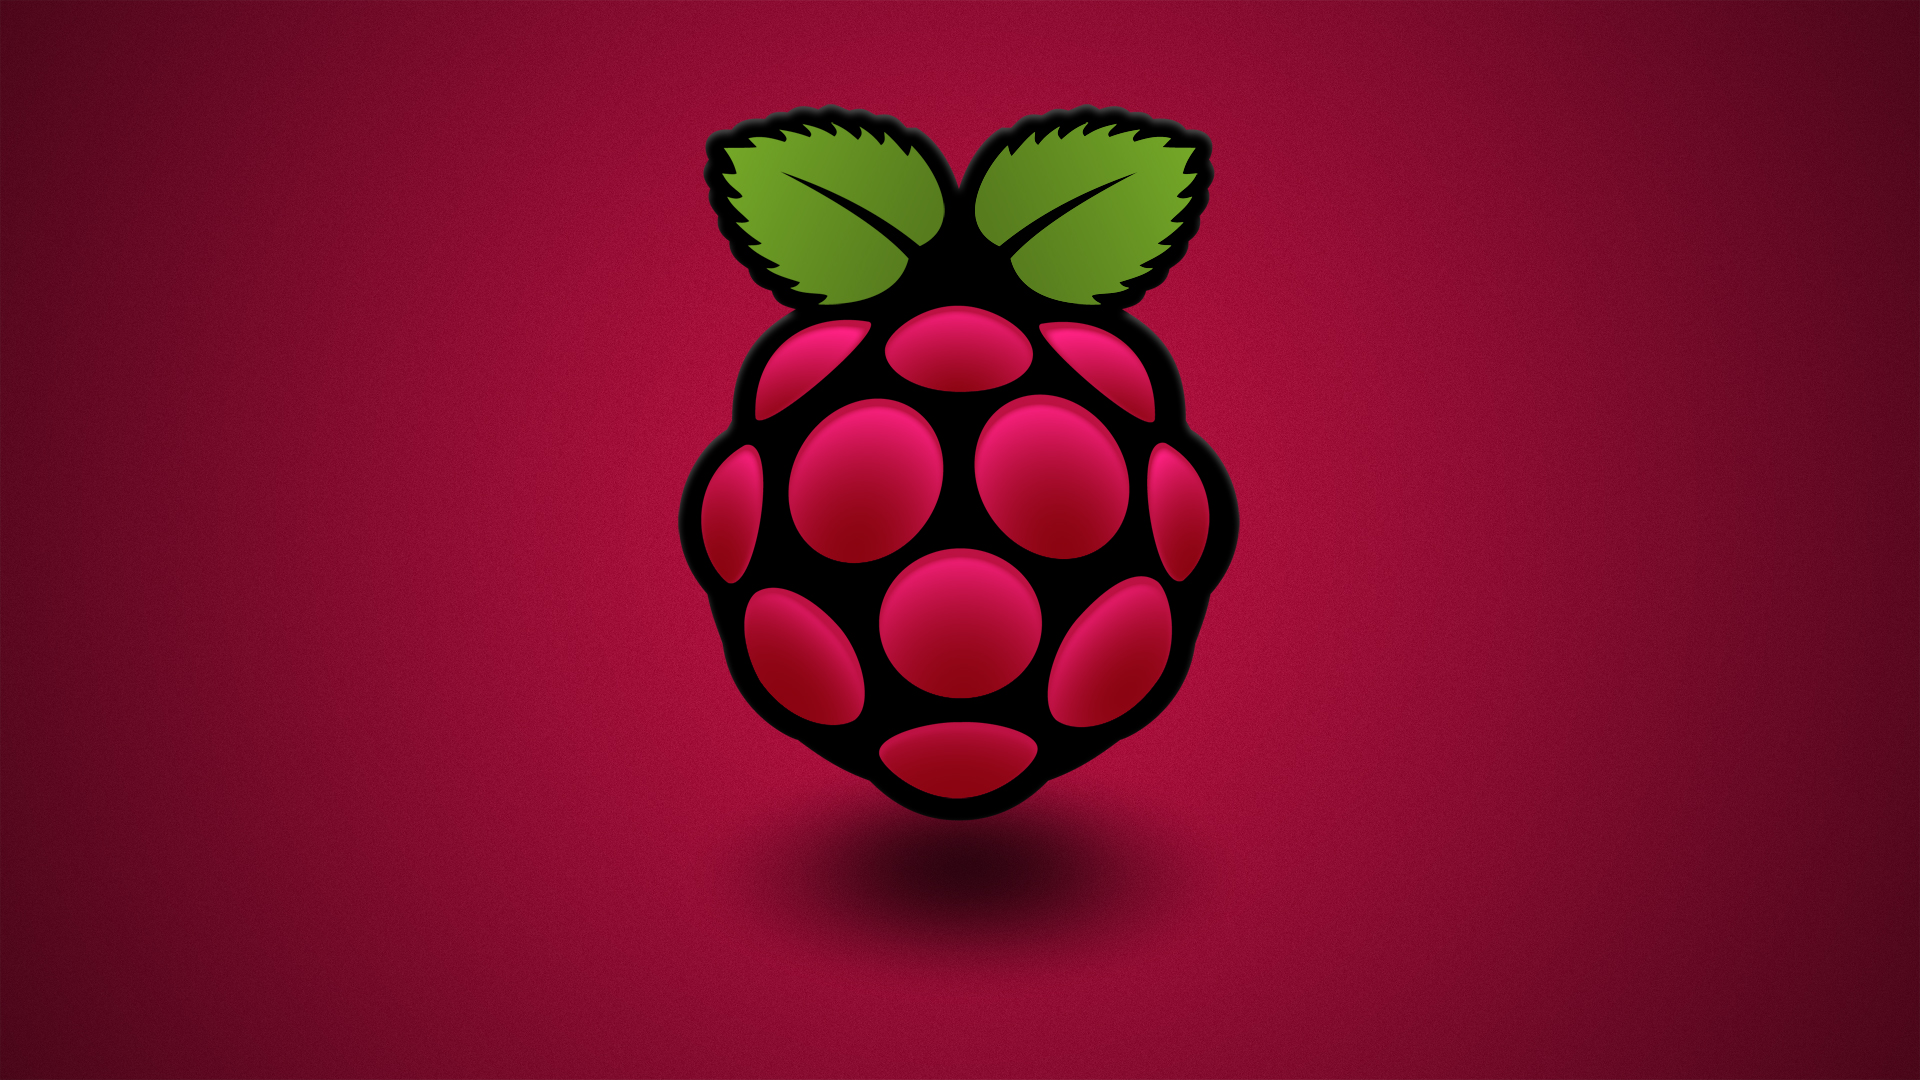 Introducing Raspberry Pi